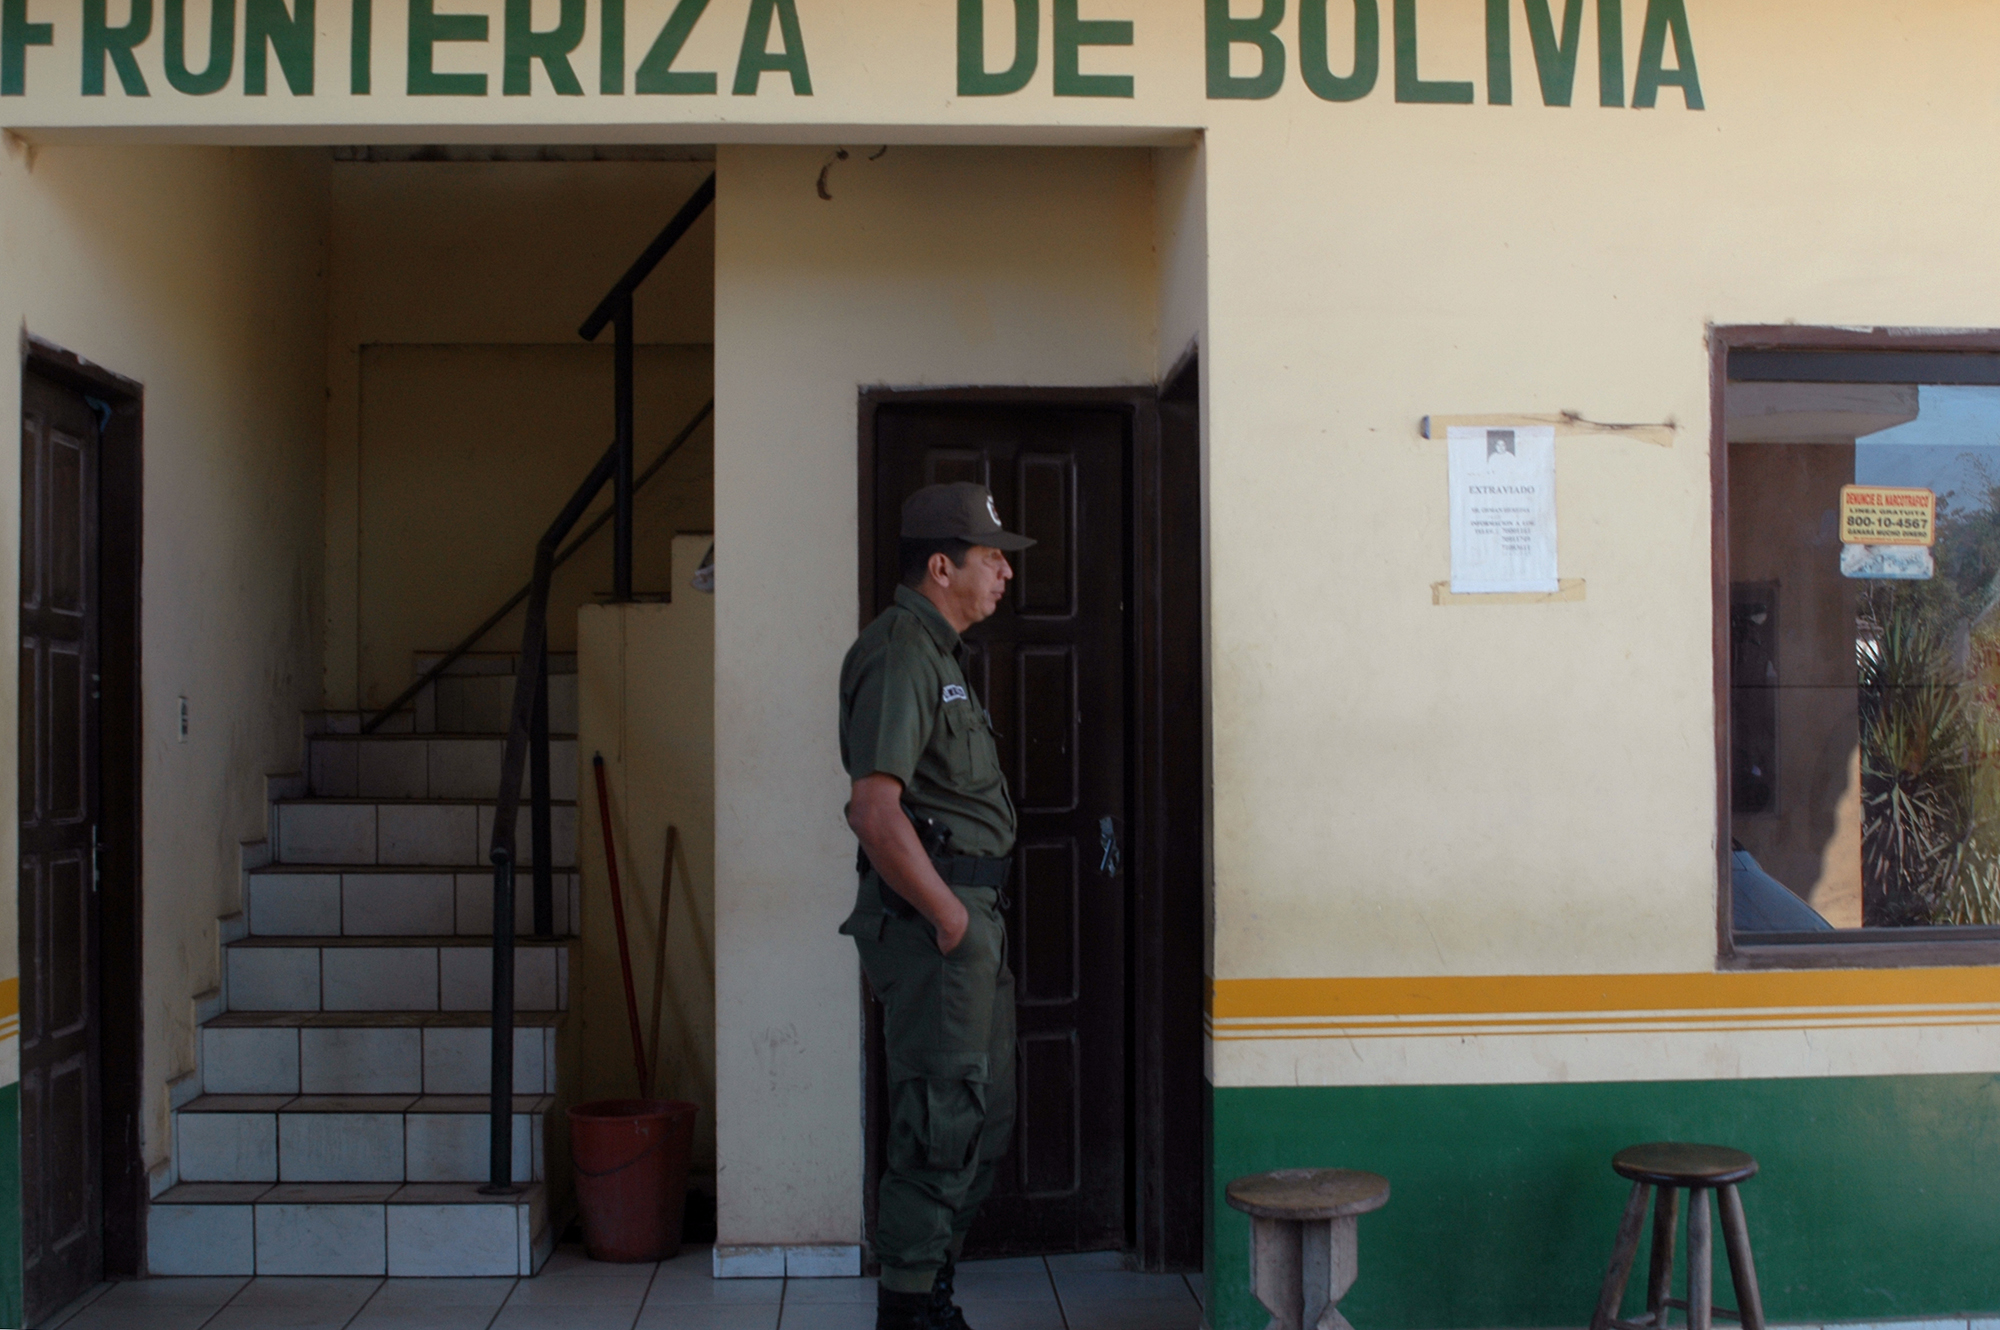 A color photograph of a security guard patrolling the fronteriza de Bolivia.